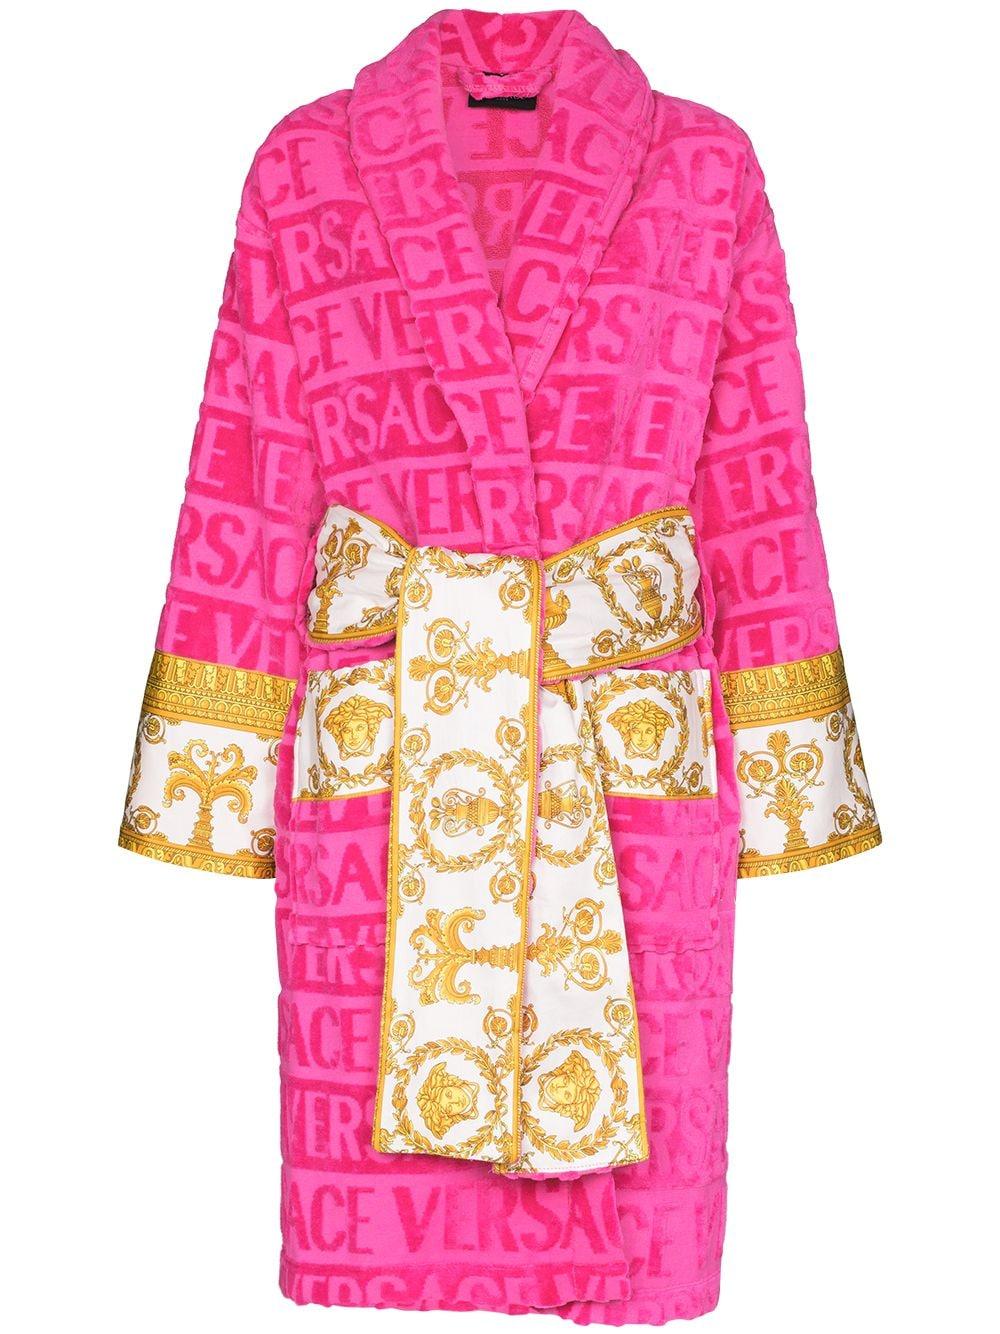 Versace I Heart Baroque Cotton Bath Robe in Pink | Lyst